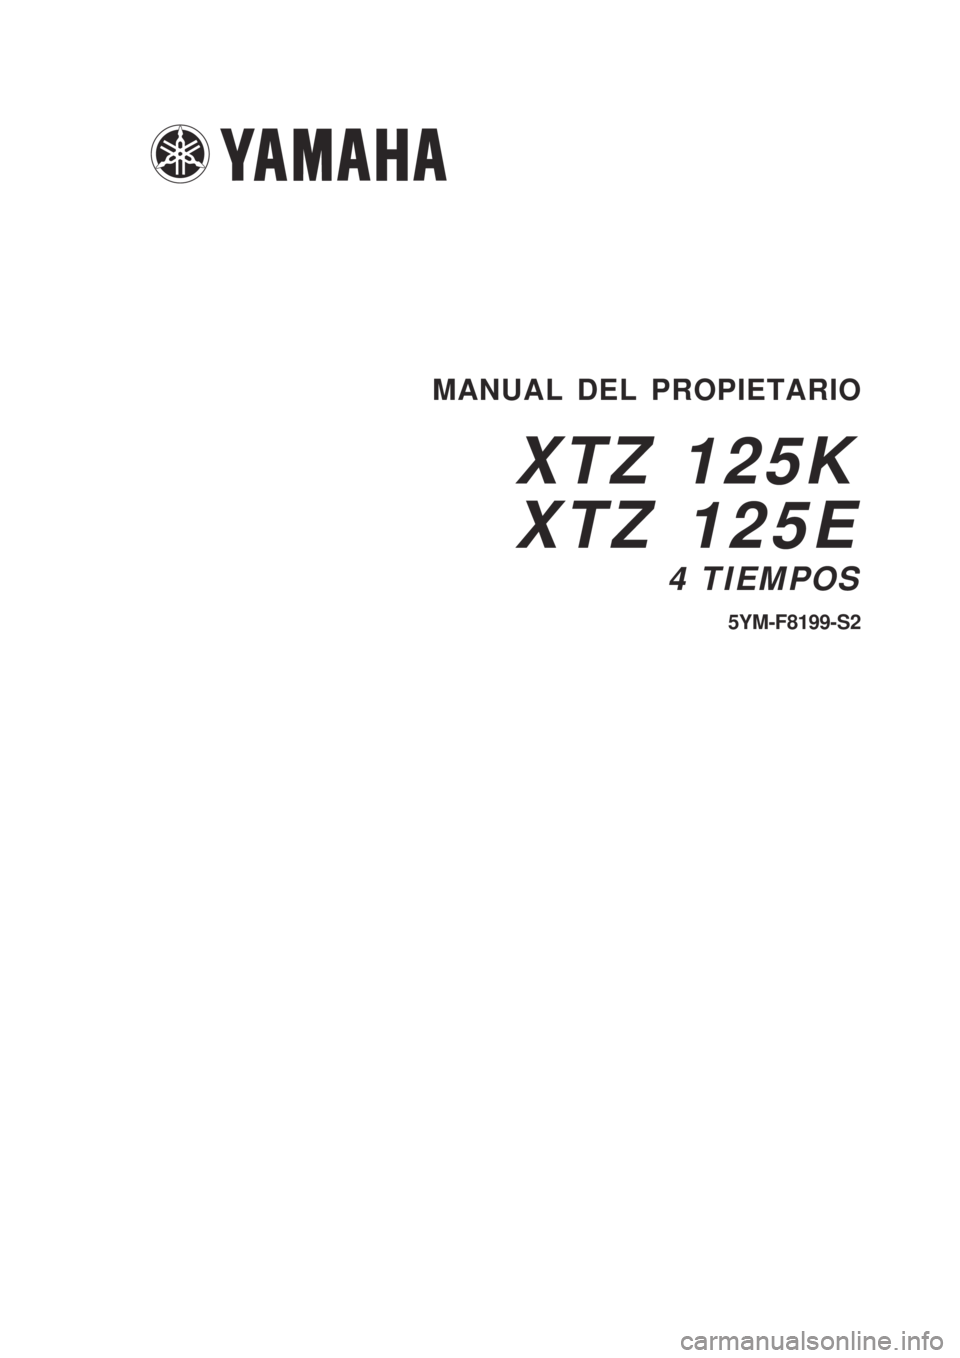 YAMAHA XTZ125 2008  Manuale de Empleo (in Spanish) I
I5YM-F8199-S2
4 TIEMPOS
MANUAL DEL PROPIETARIO
XTZ 125K
XTZ 125E
5YM-F8199-S1
4 TIEMPOS
MANUAL DEL PROPIETARIO
XTZ 125K
XTZ 125E 